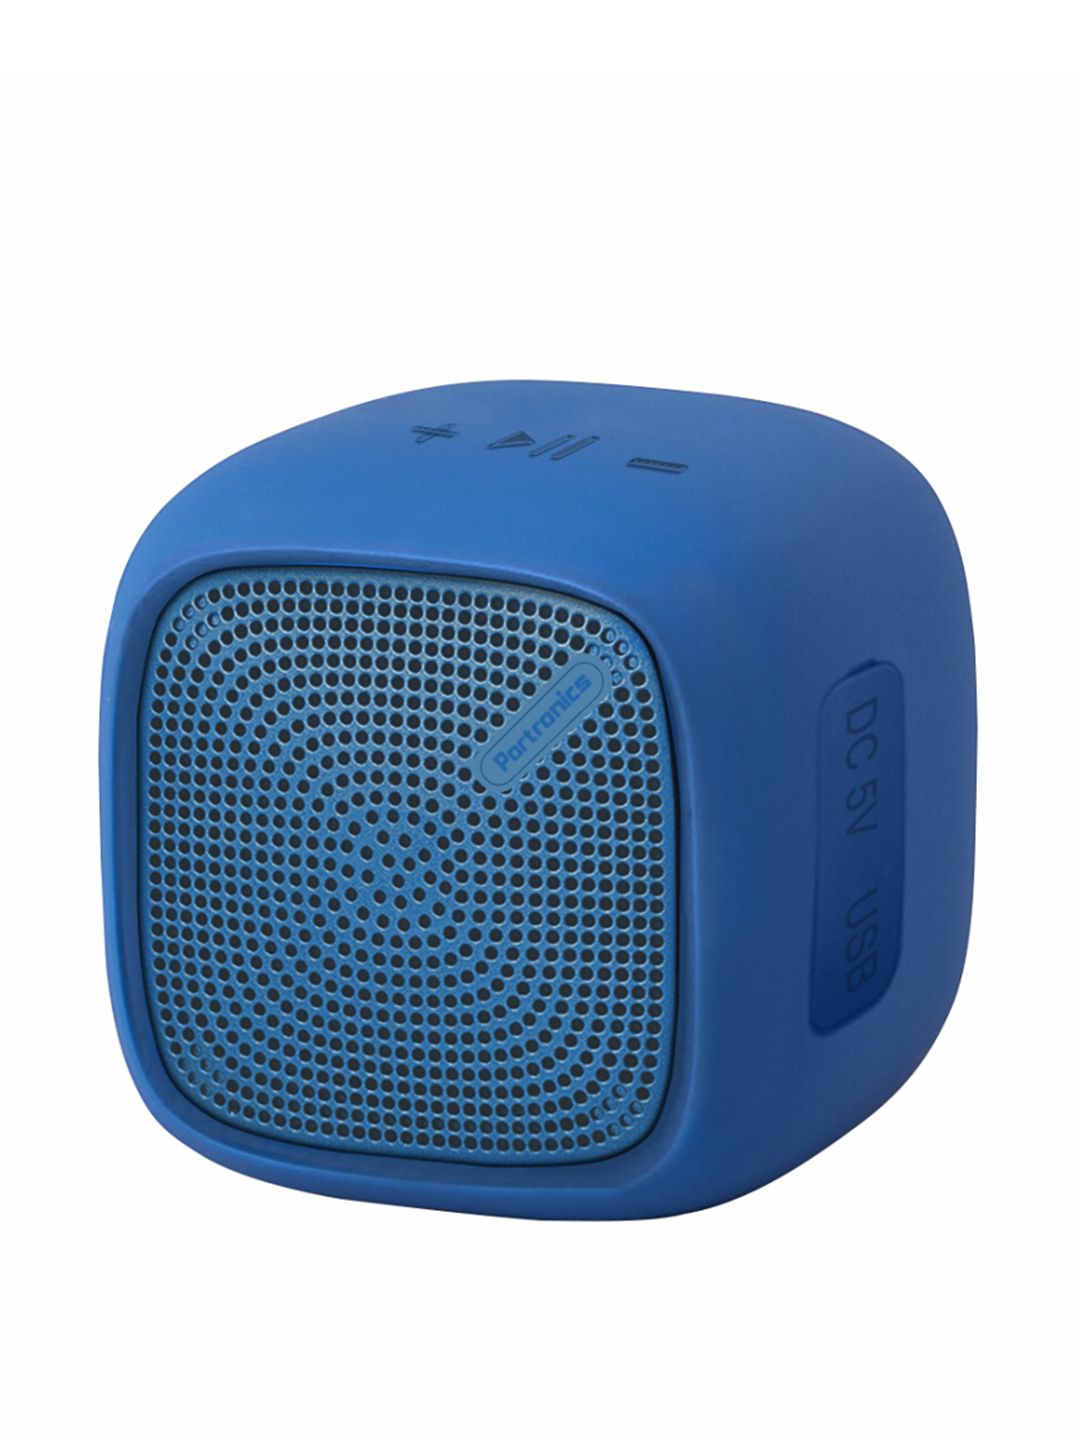 Portronics Blue Bounce Portable Bluetooth Speaker POR-952 Price in India